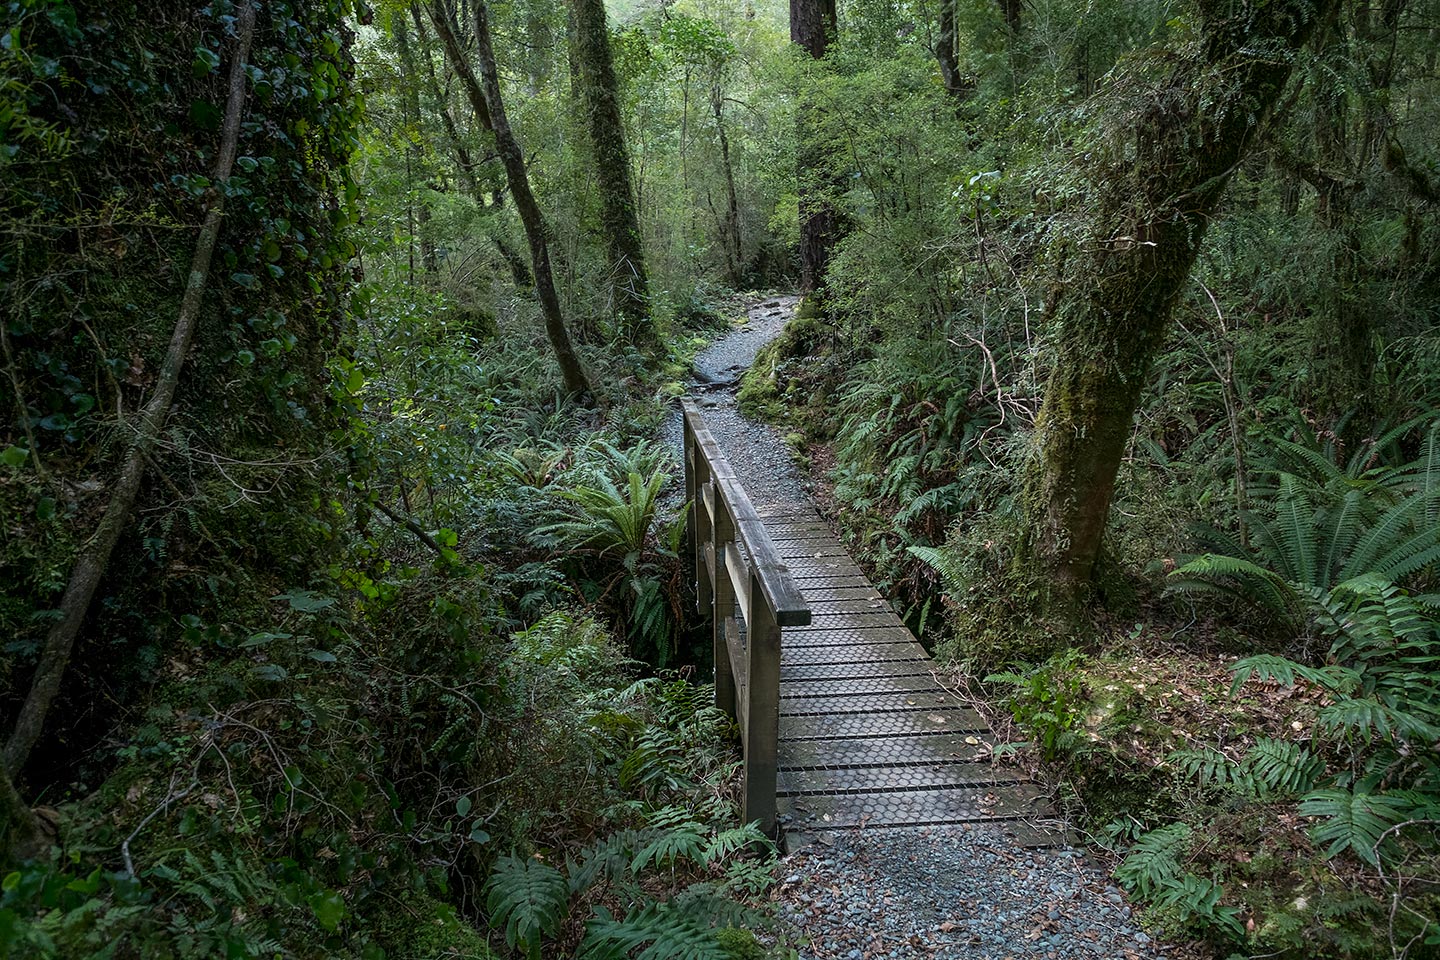 Humboldt Falls, Fiordland National Park, New Zealand